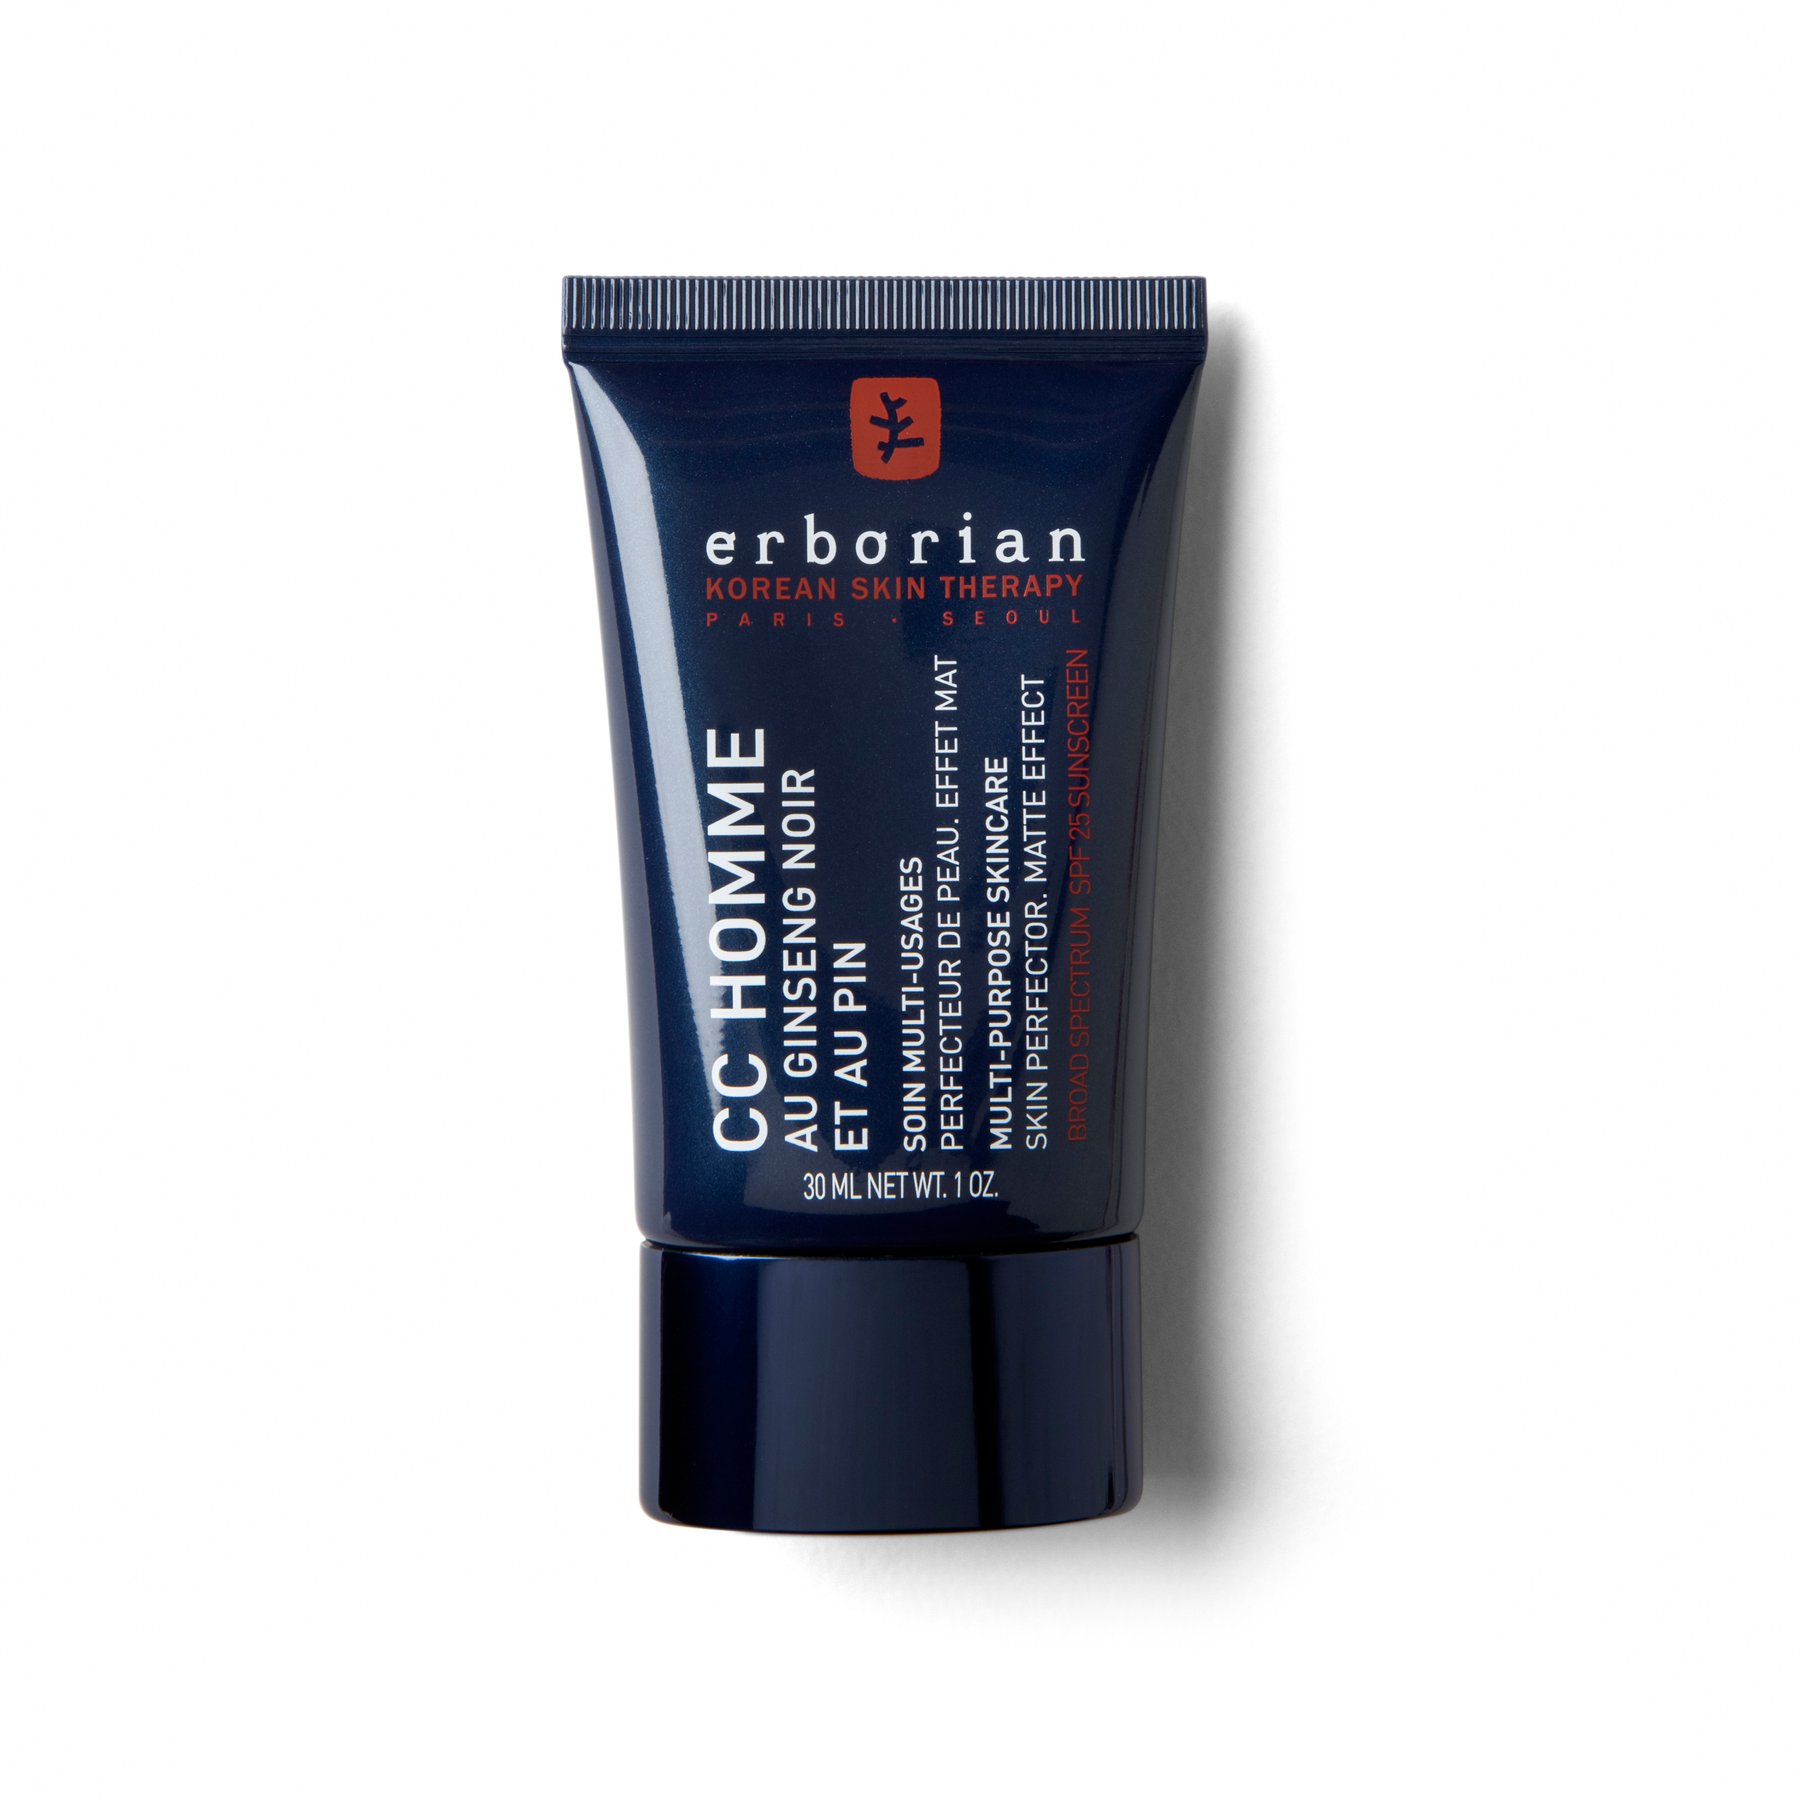 СС крем для мужчин Erborian CC Homme Multi-Purpose Skincare Skin Perfector Matte Effect SPF 25